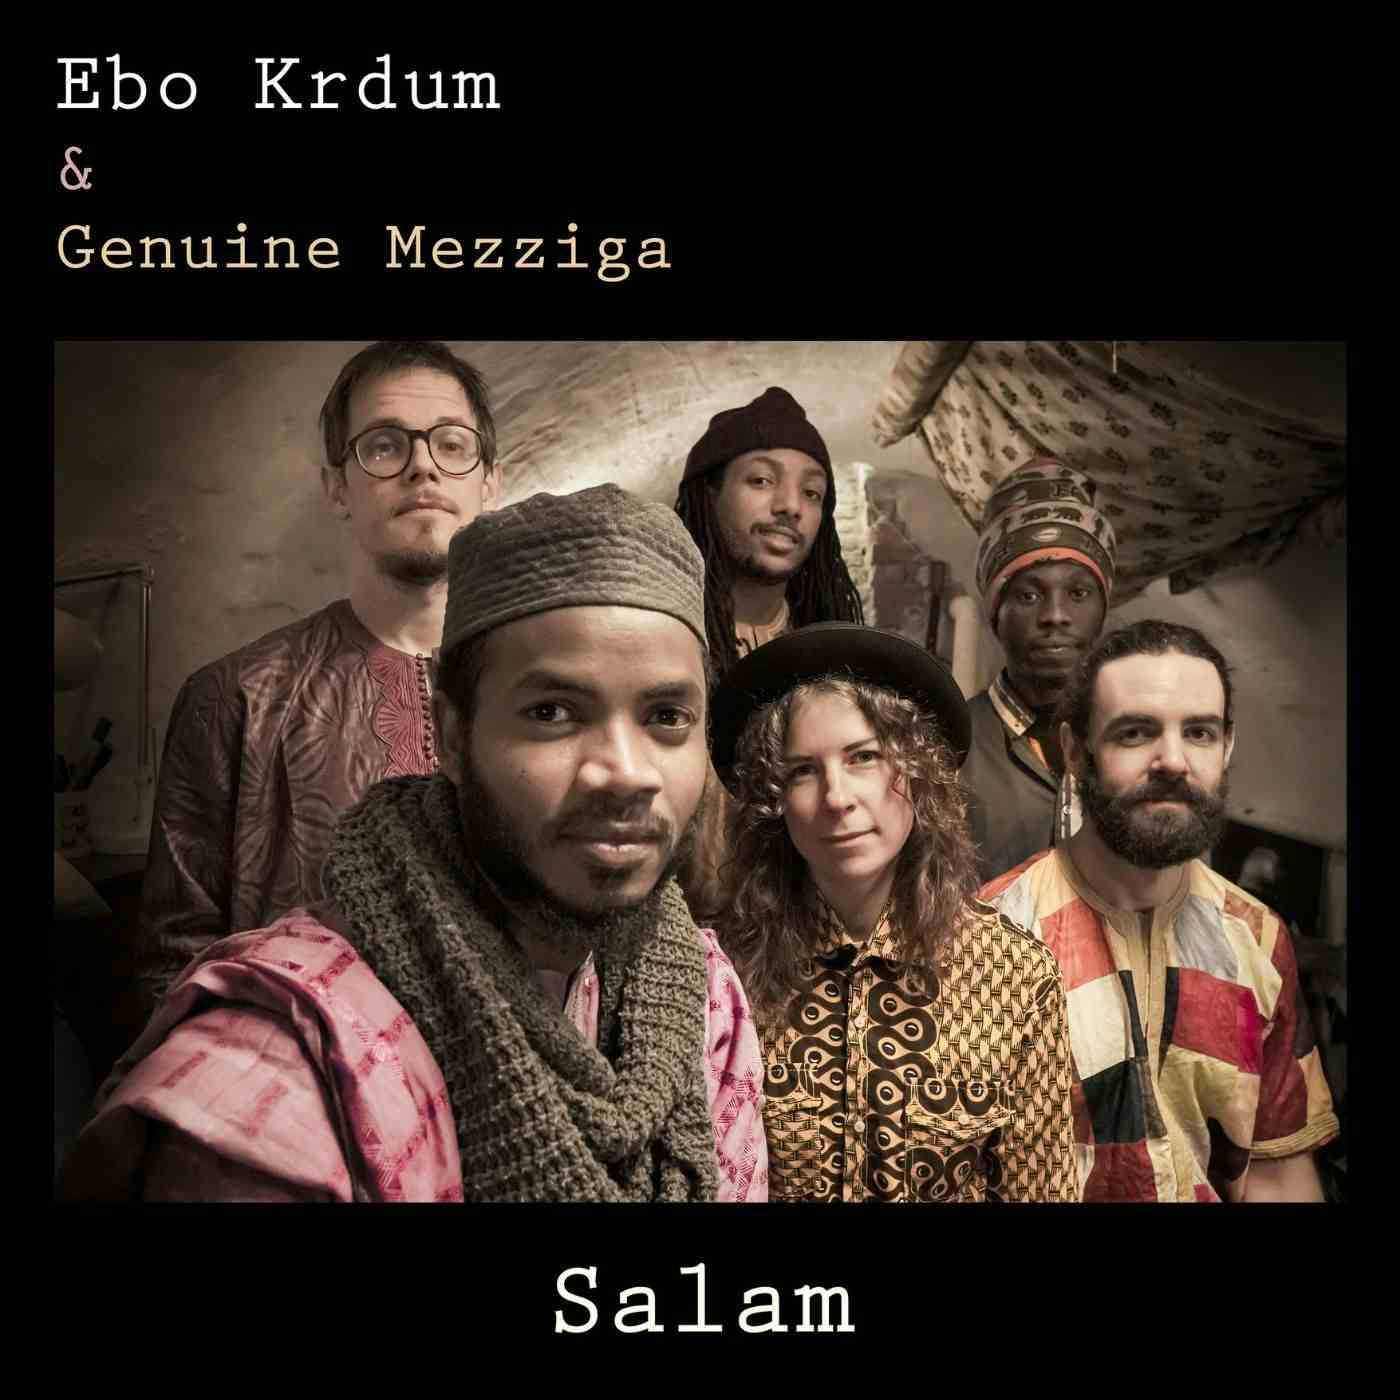 Photo of Ebo Krdums album Salam